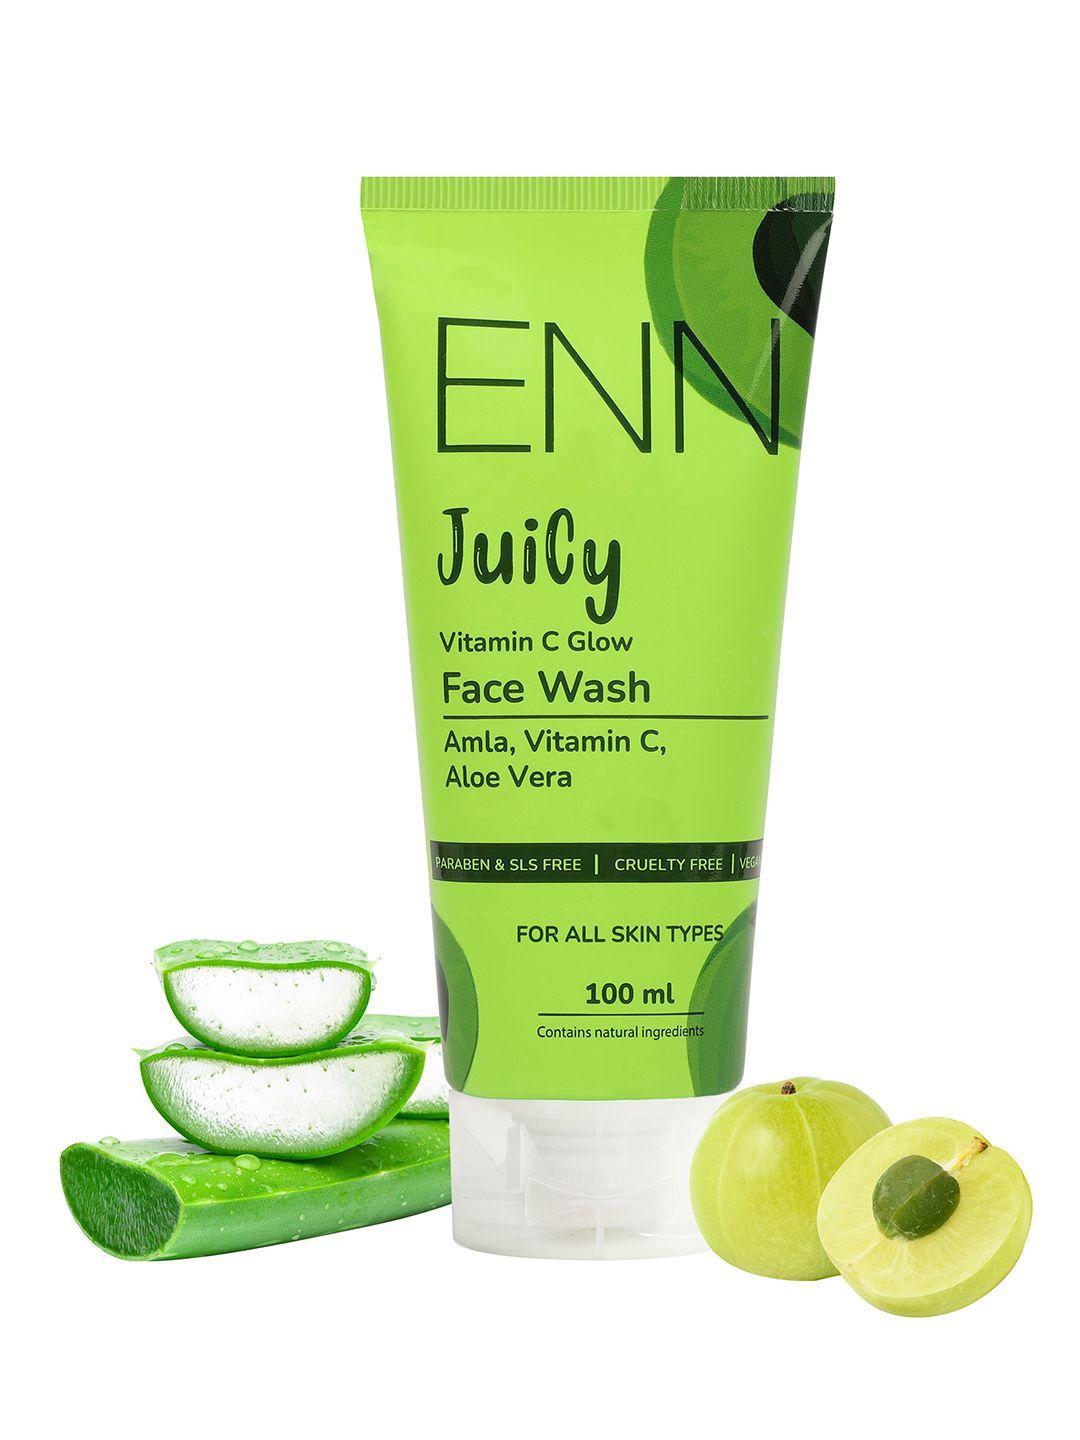 enn  juicy vitamin c glow face wash, 100ml